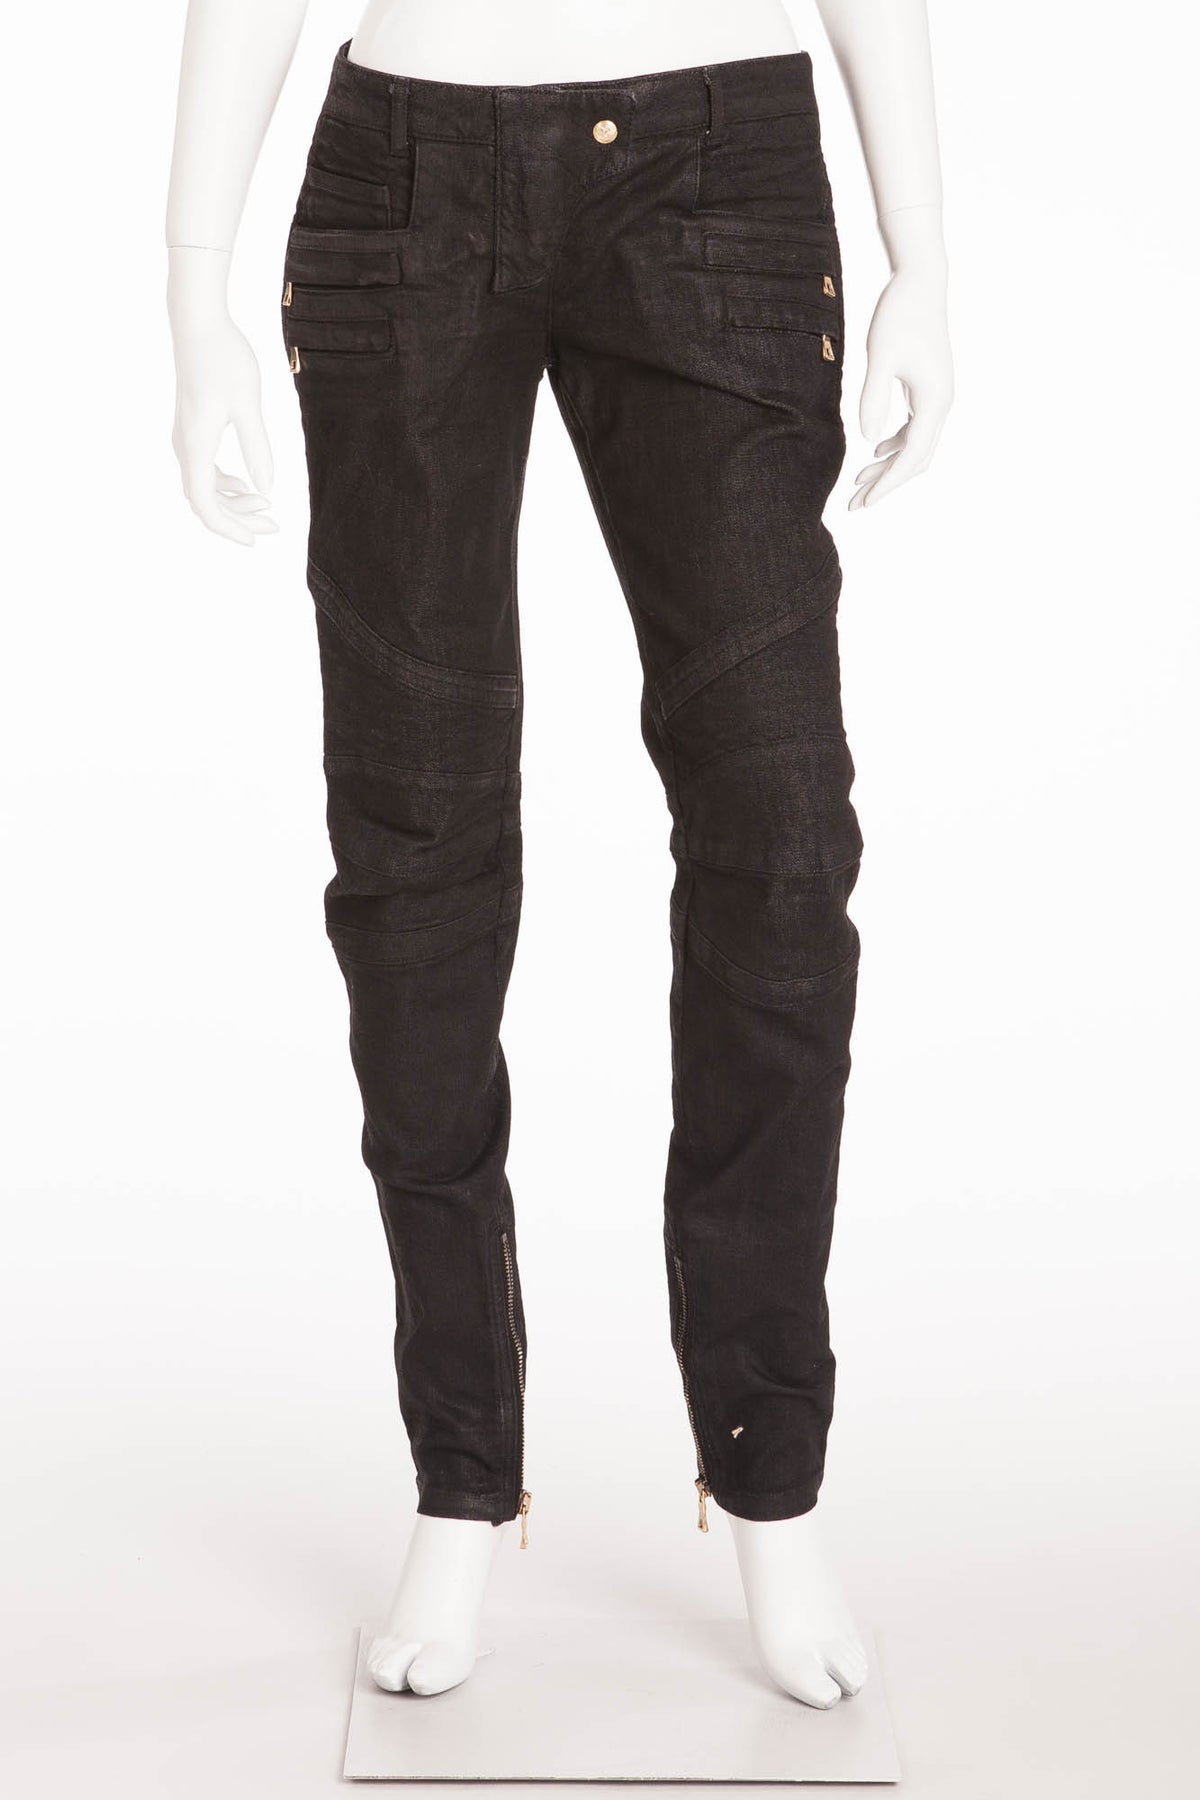 Balmain - Black Skinny Moto Style Jeans - FR